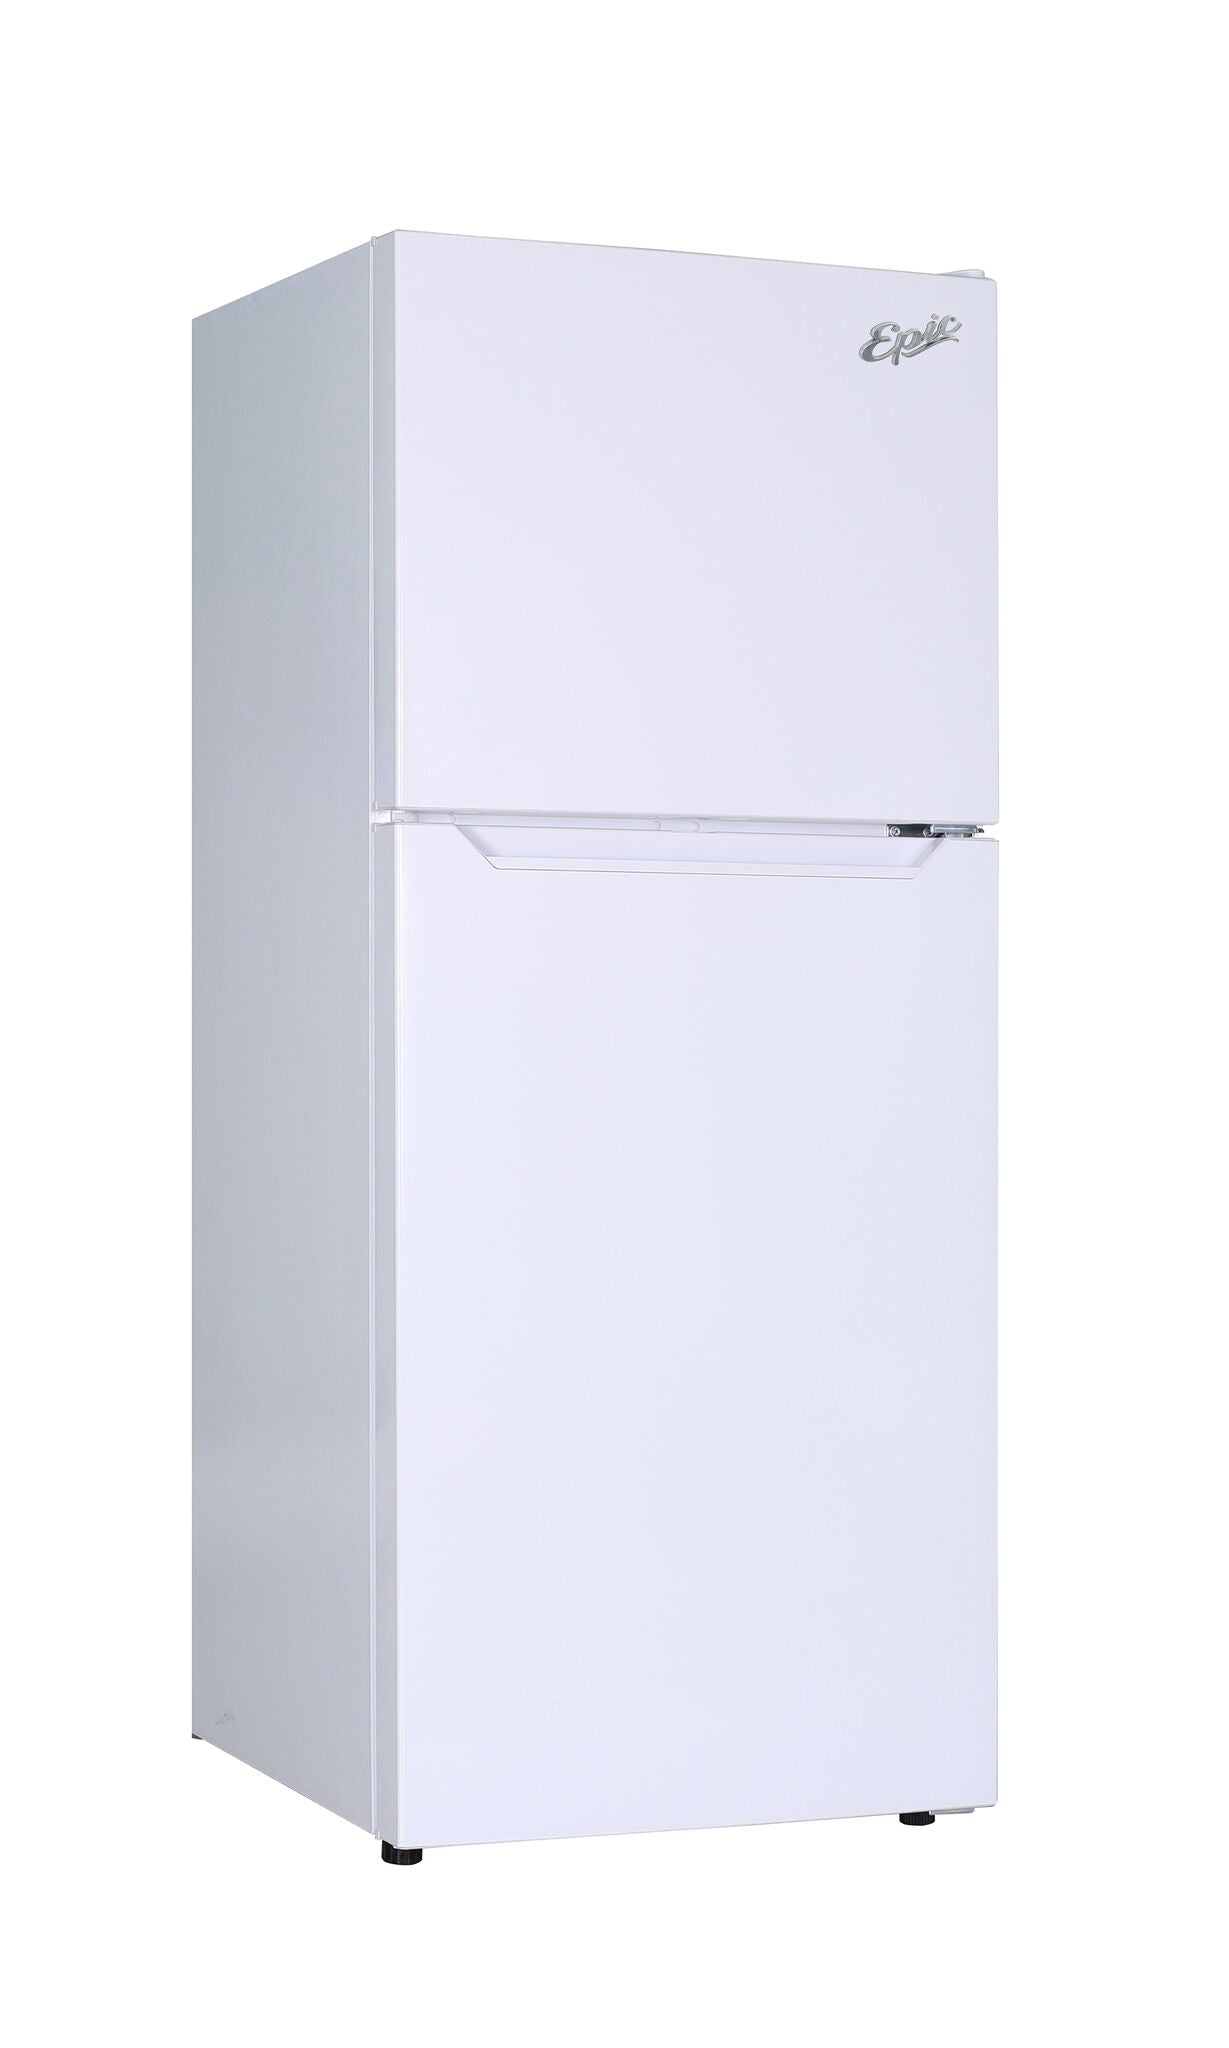 Epic White Top Mount Refrigerator (18 cu.ft) - EFF181W